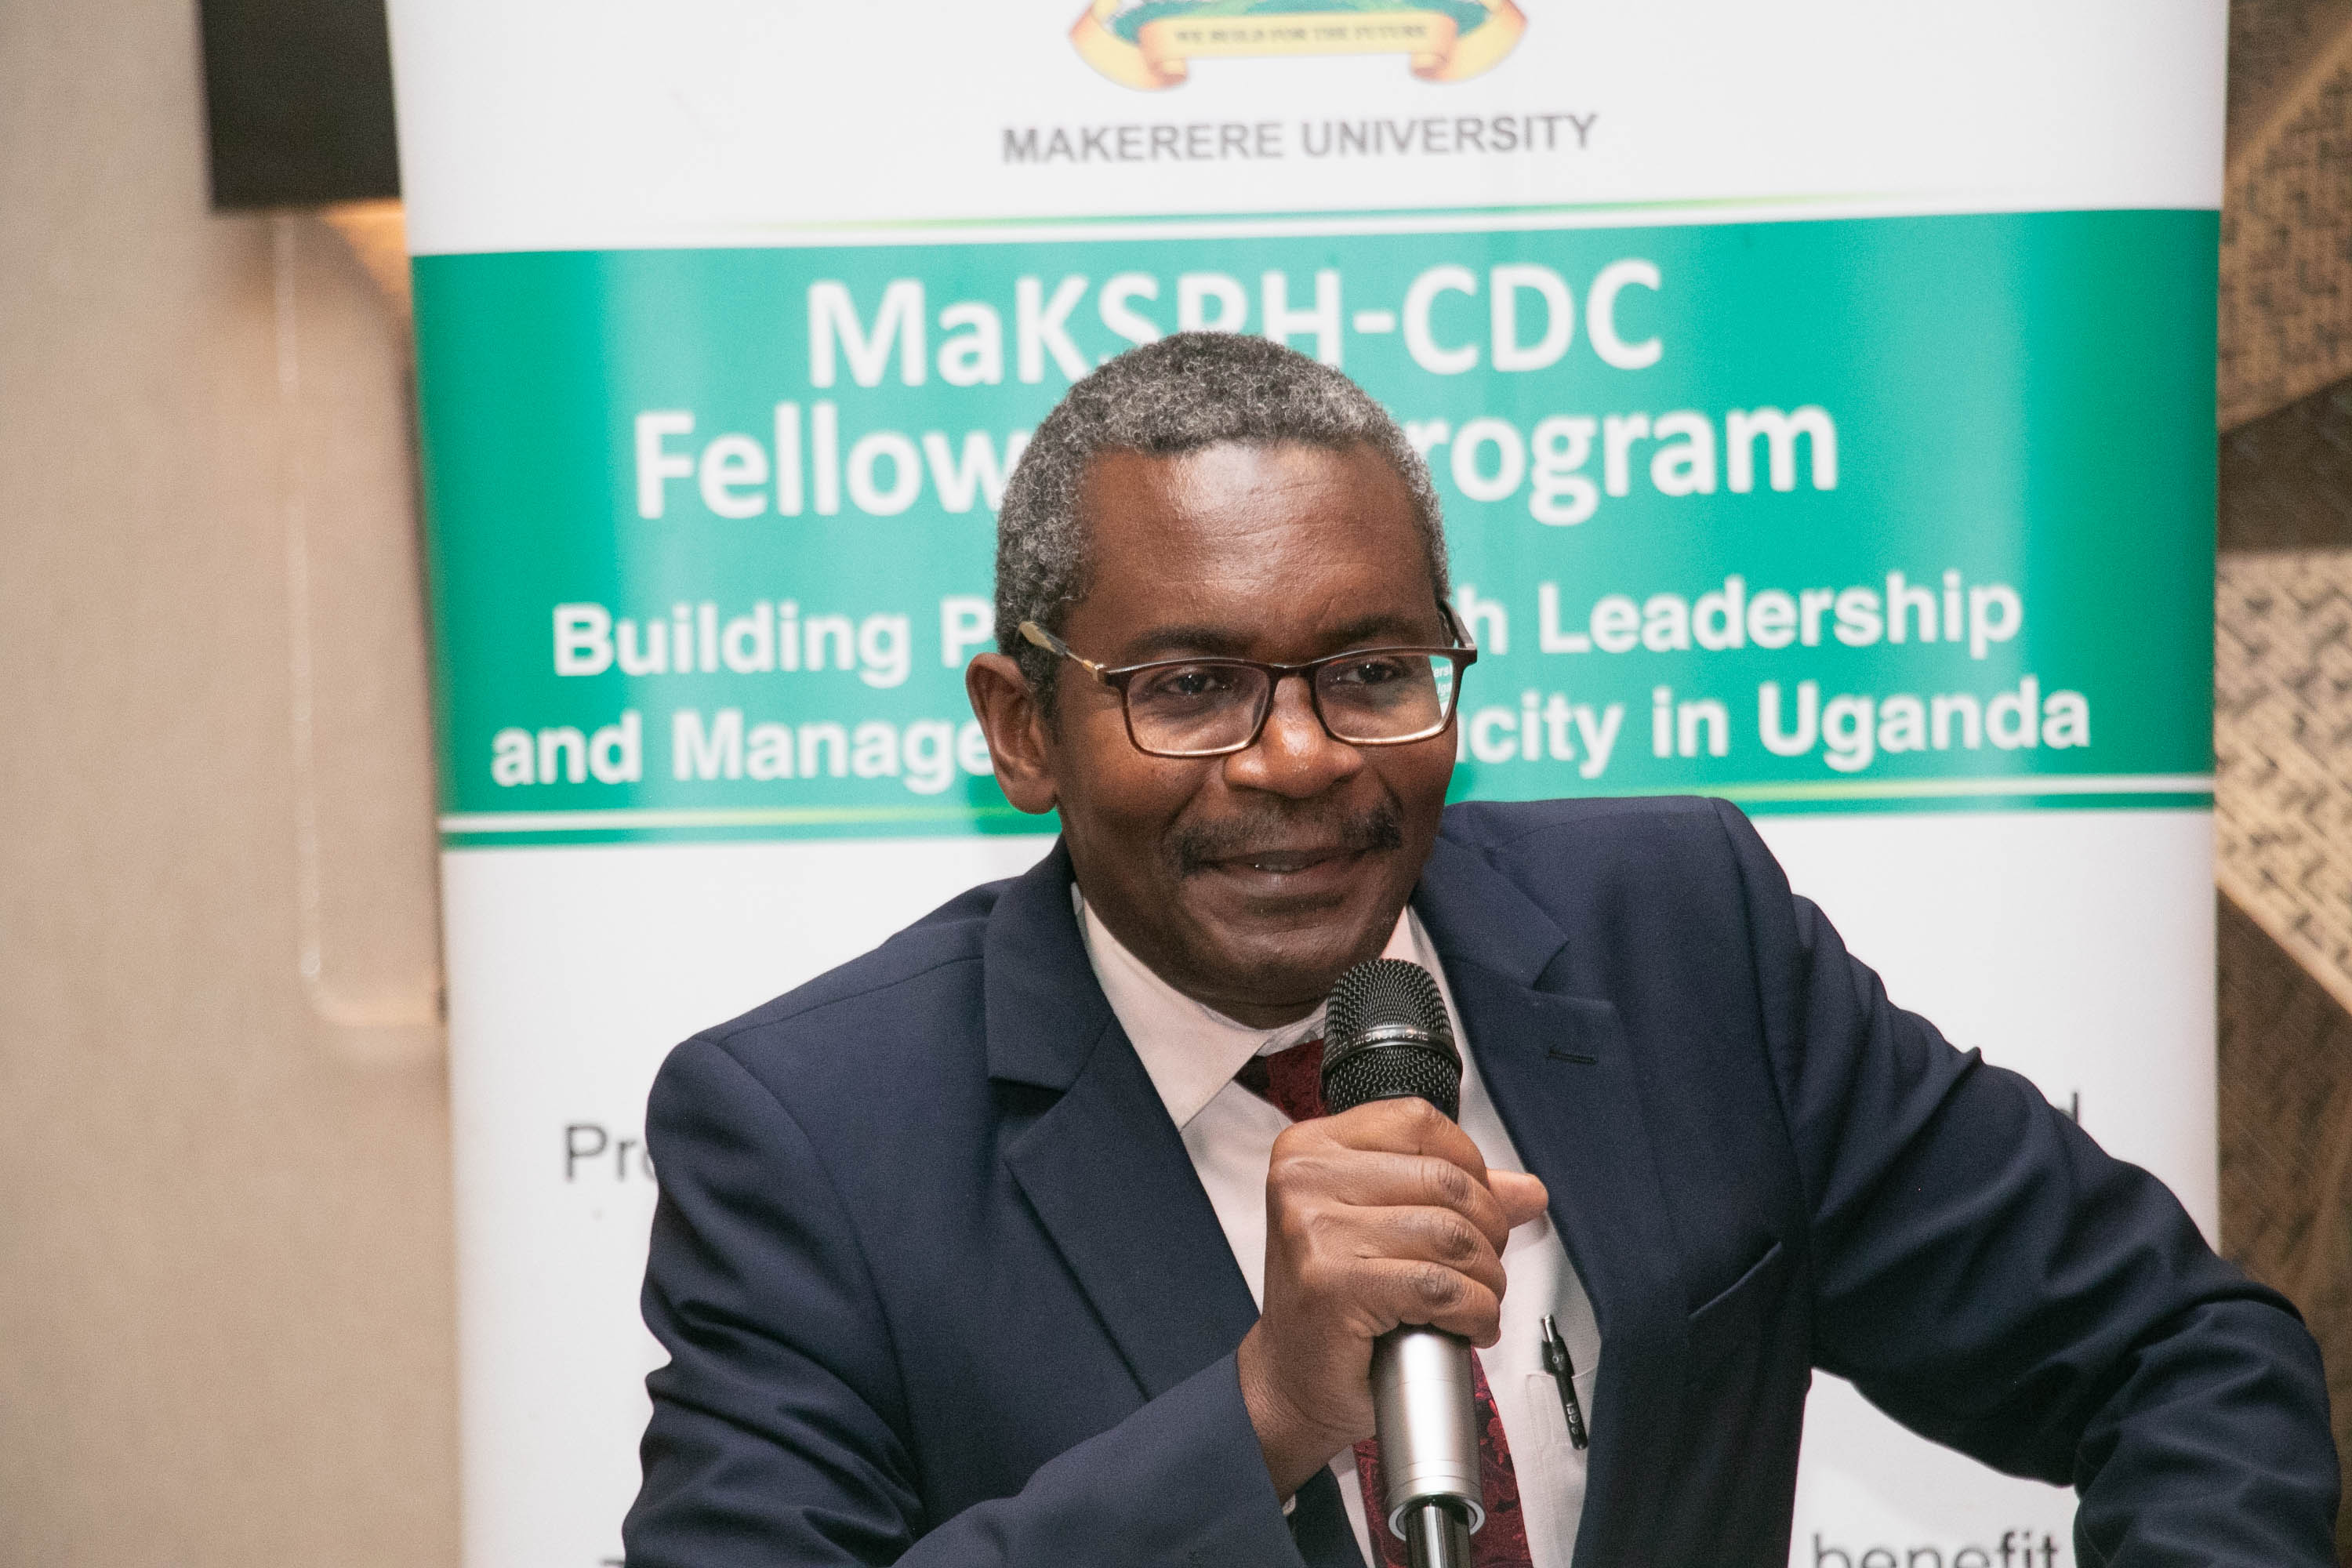 Dr. Henry Kajumbula, the course facilitator and Program Lead for the MakSPH-IPC fellowship